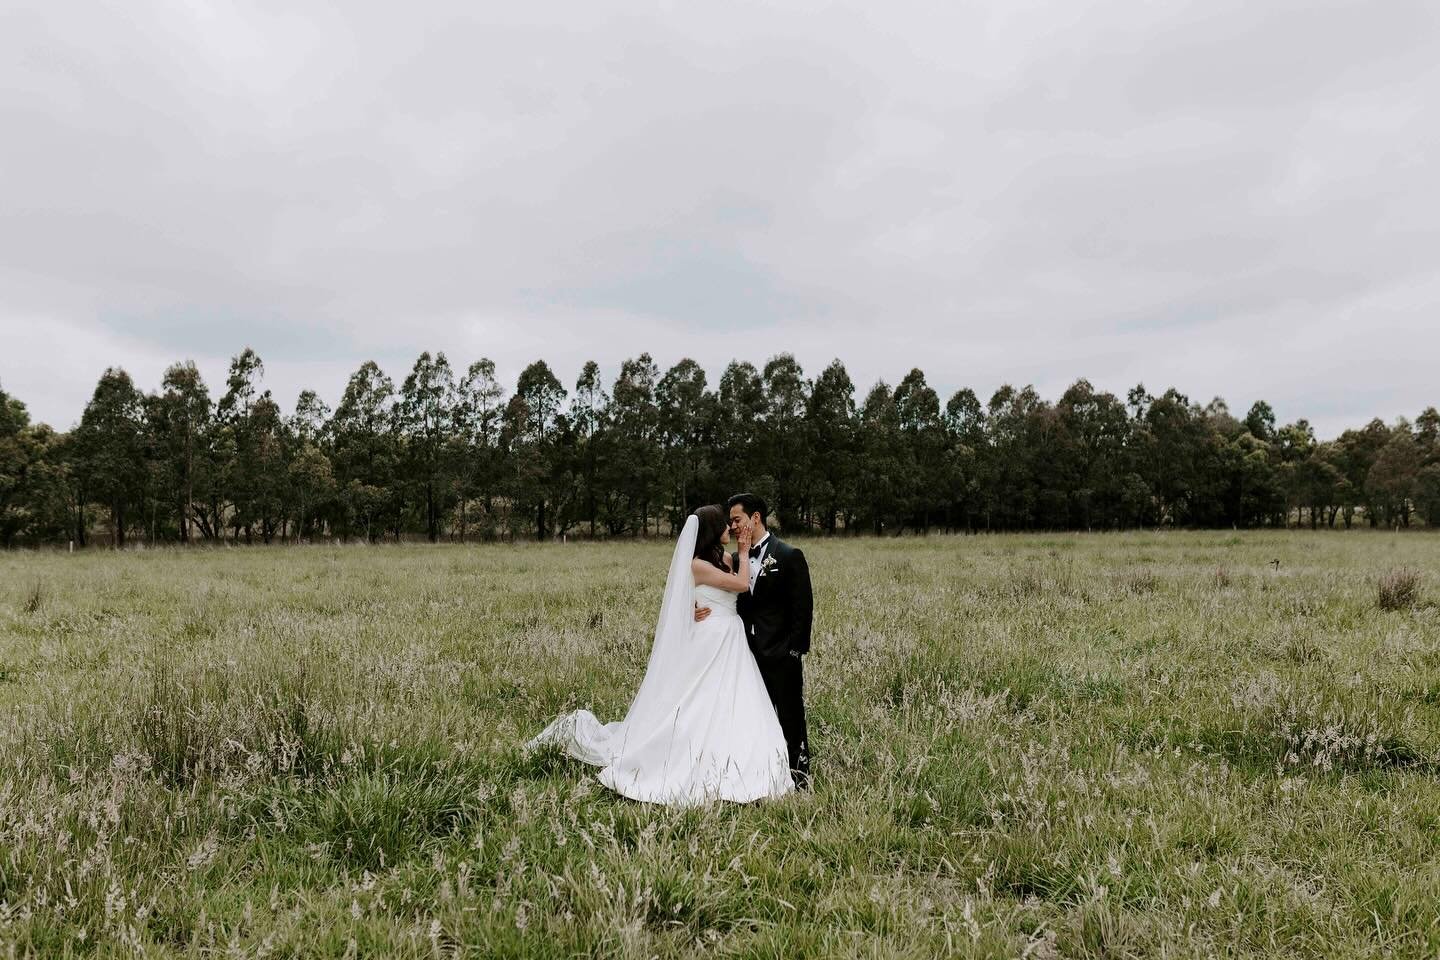 Cynthia &amp; James 💕 // #southernhighlands #bowral #weddingdress # bride #groom # weddingphotographer #sydneyweddingphotographer #countrywedding #weddingphotography